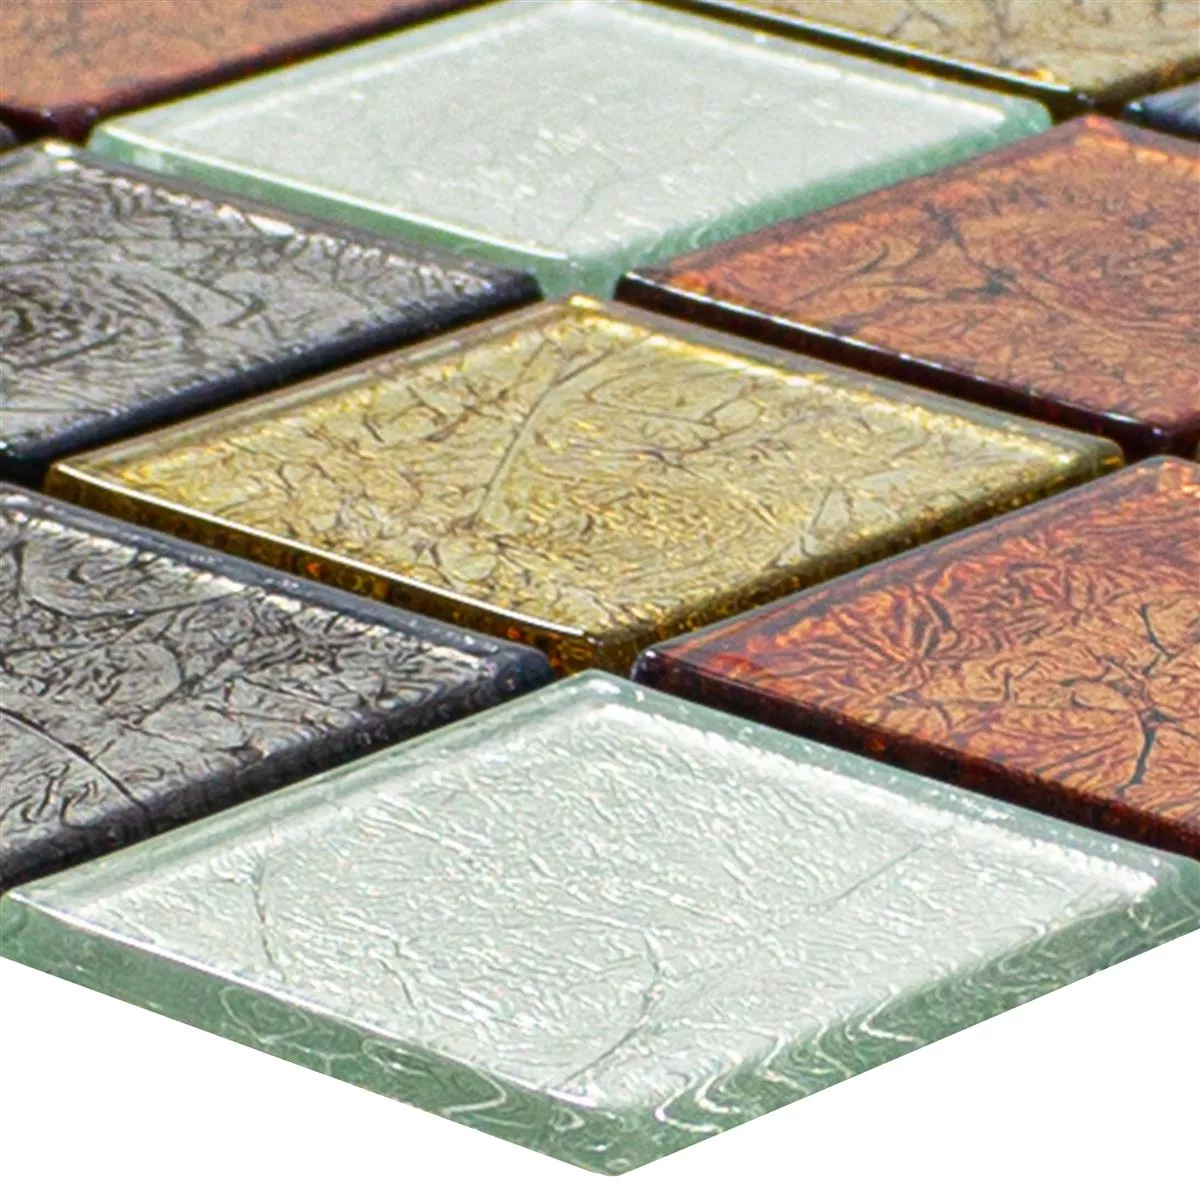 Skleněná Mozaika Dlaždice Curlew Červená Hnědá Stříbrná Q48 4mm 